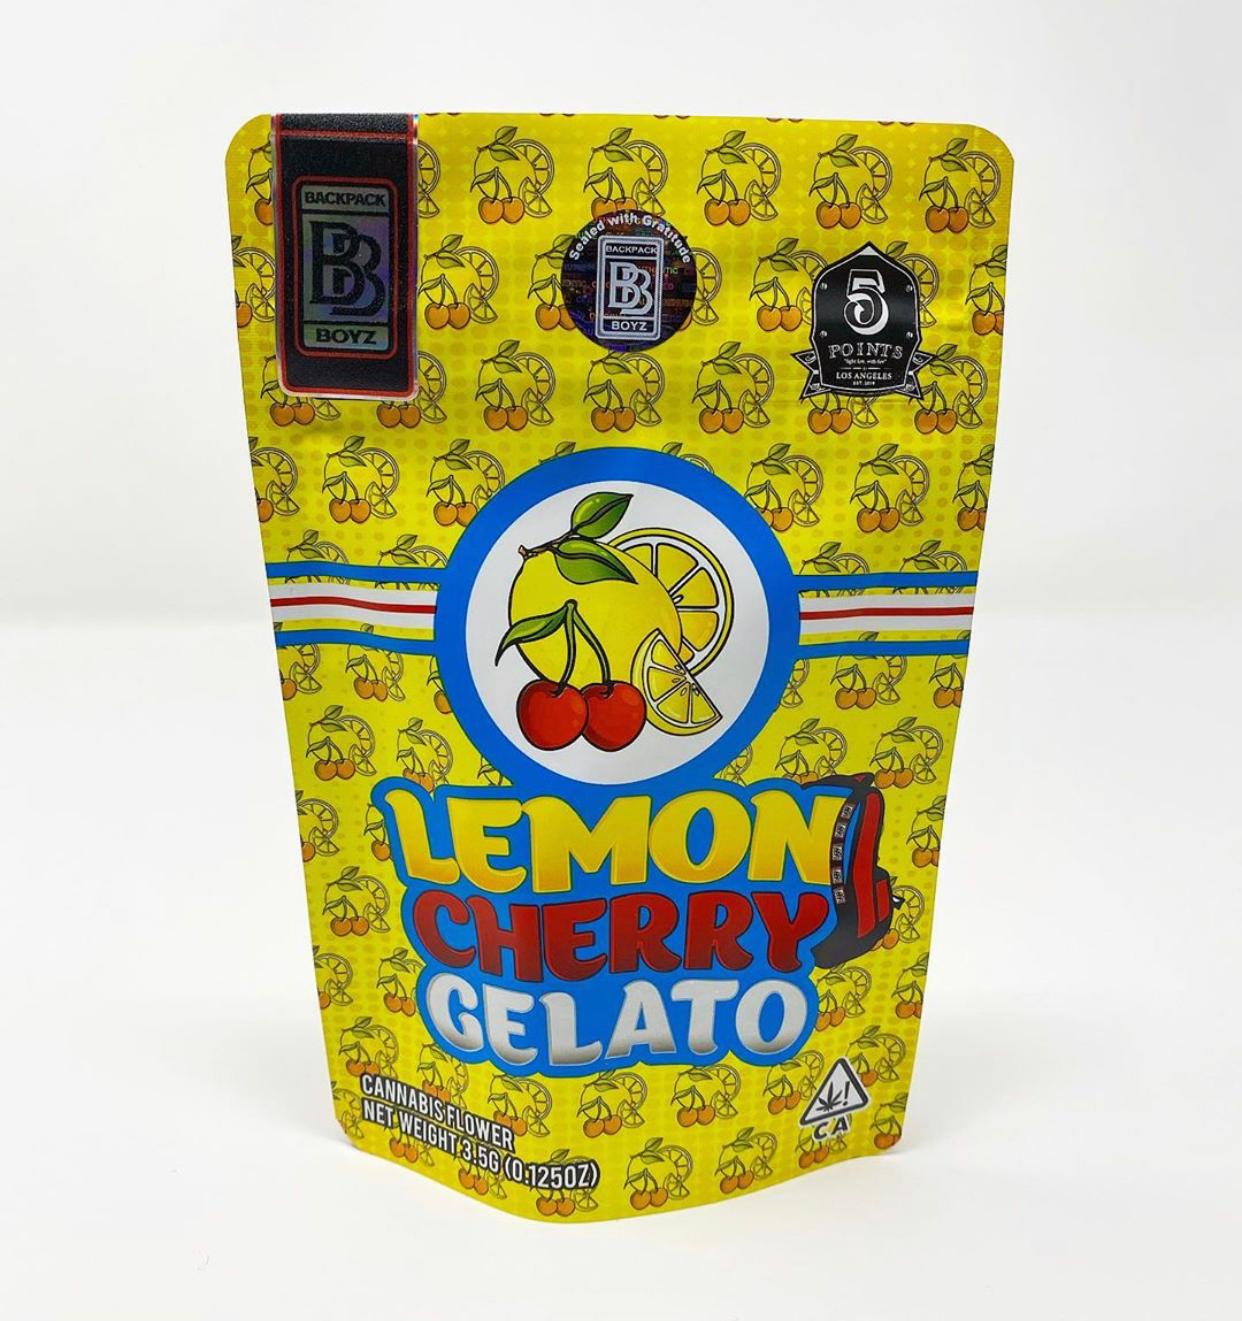 Lemon Cherry Gelato Backpackboyz